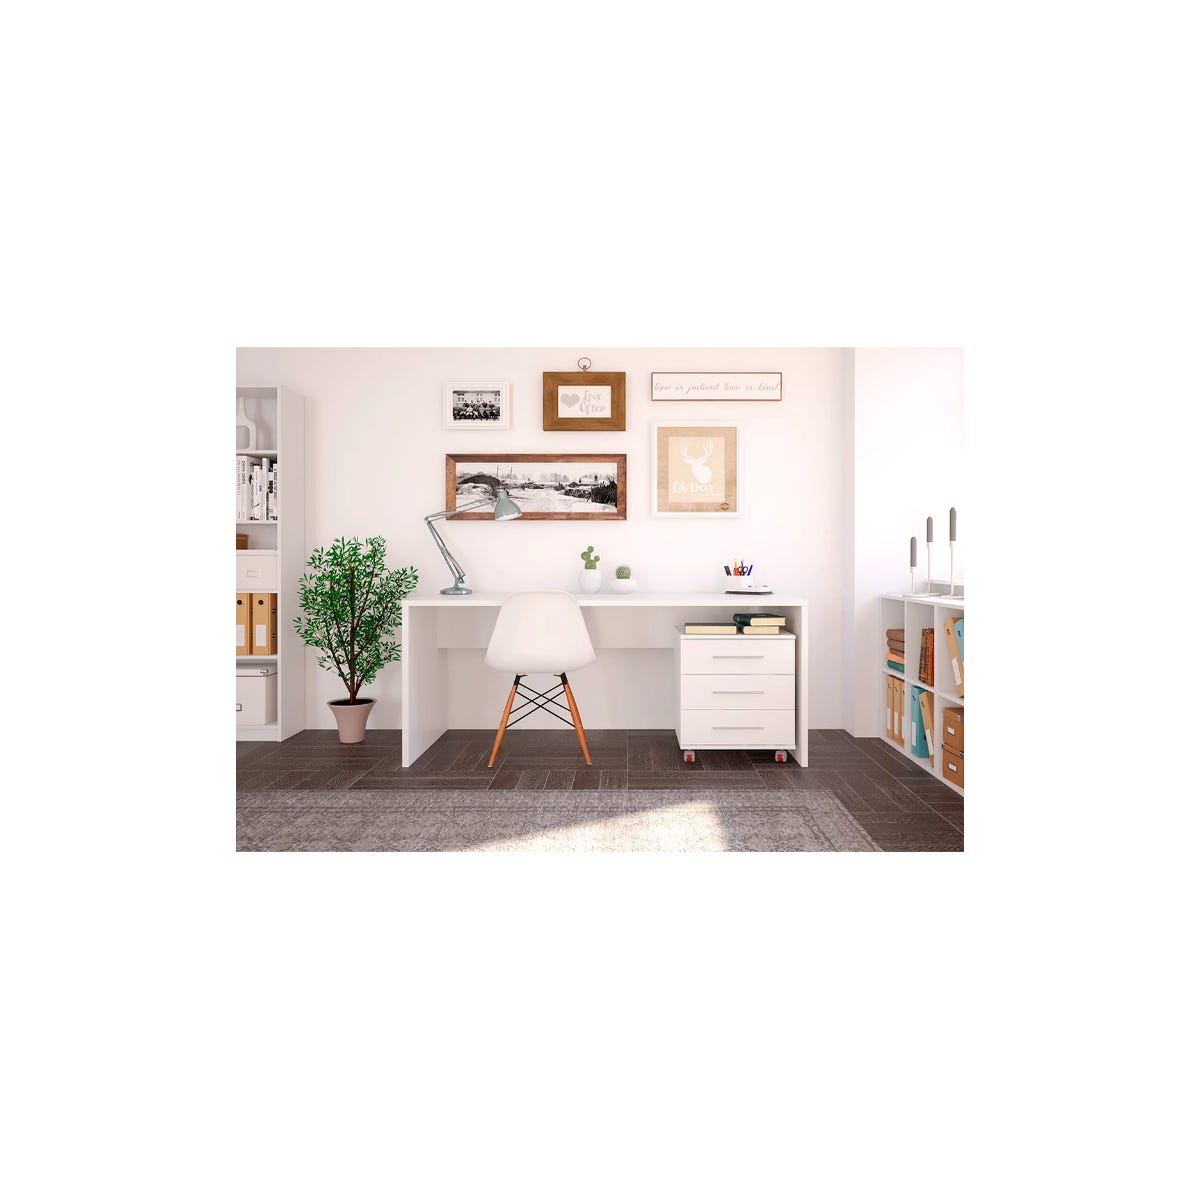 Mesa de despacho acabado blanco 75 cm(alto)160 cm(ancho)68 cm(fondo)